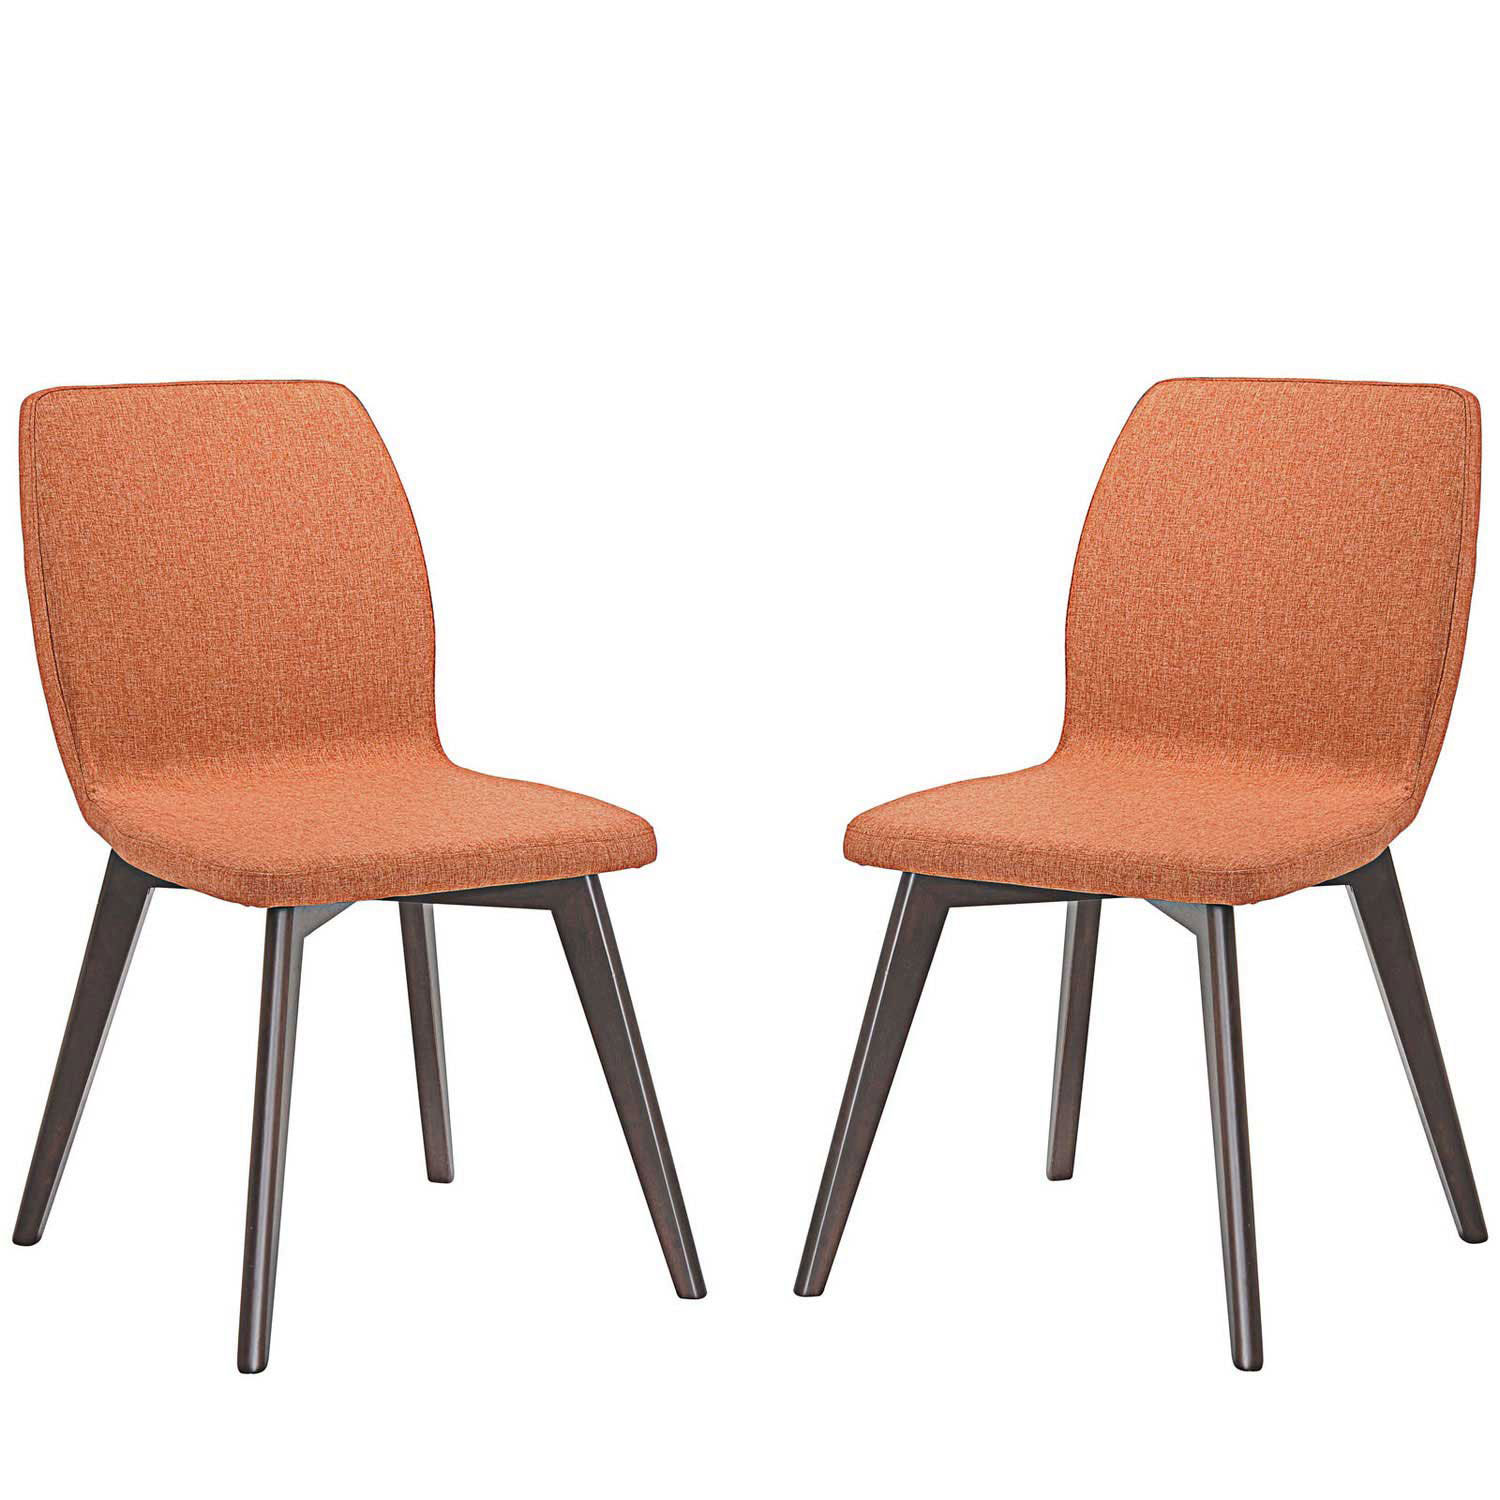 Modway Proclaim Dining Side Chair Set of 2 - Walnut Orange